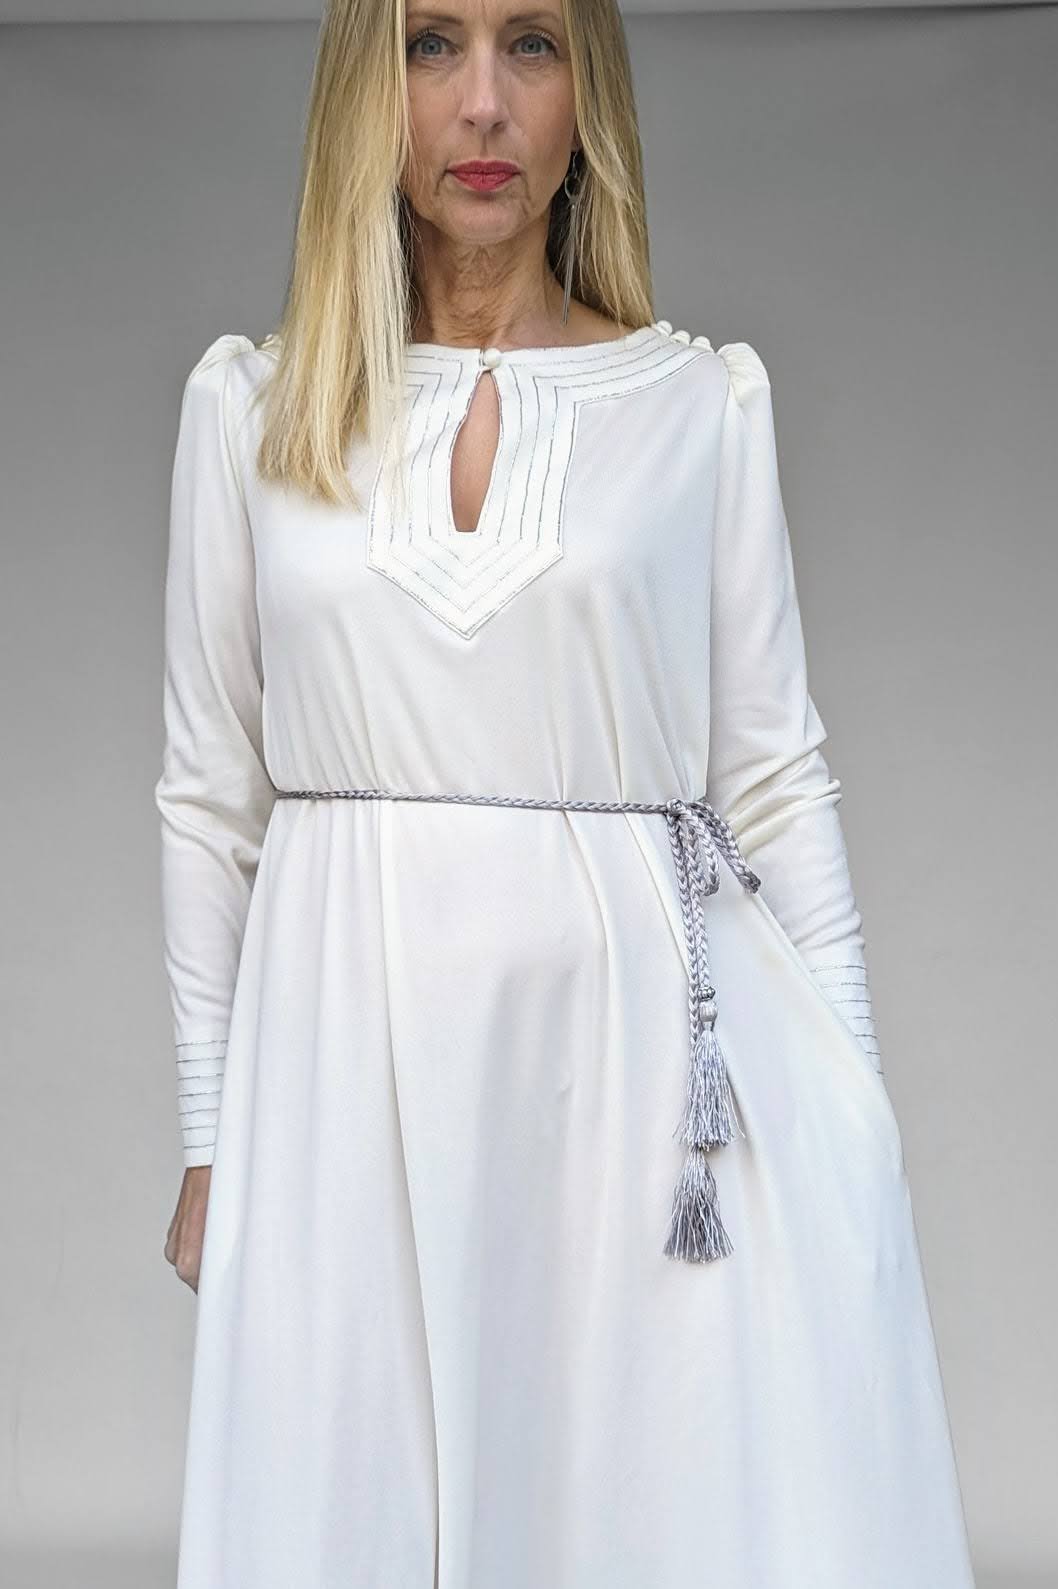 Vintage evening white dress